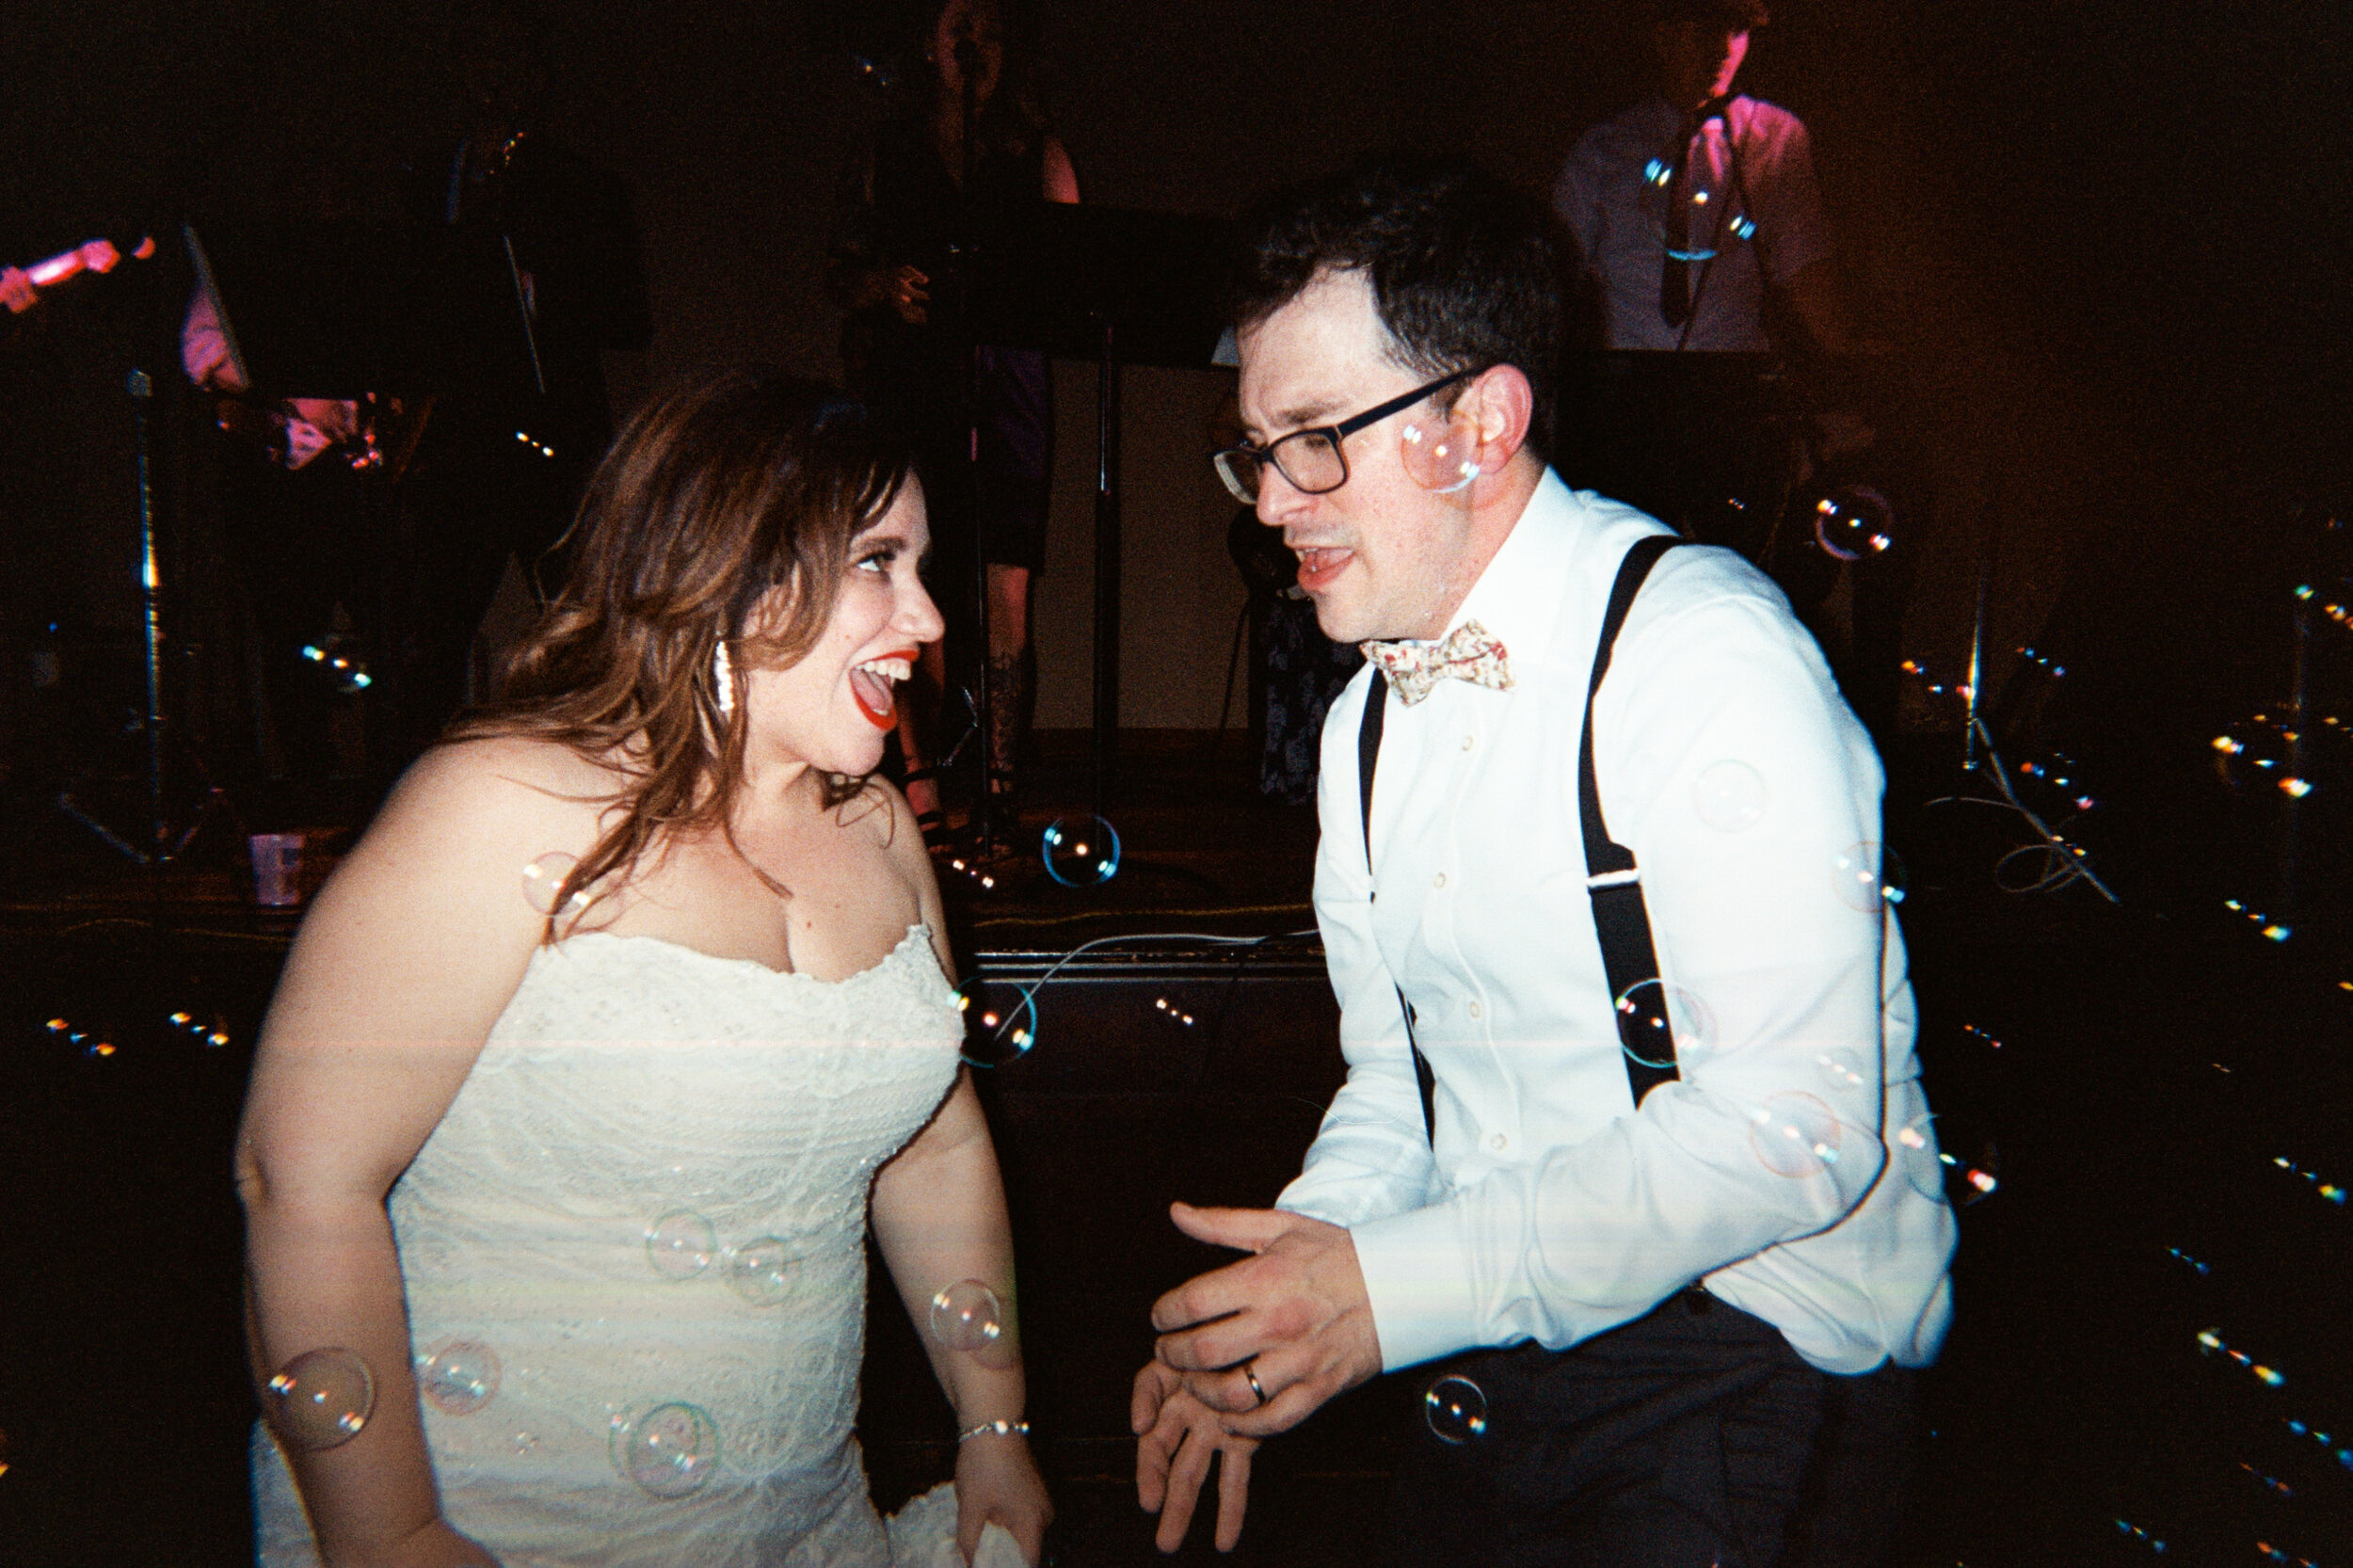 Pittsburgh NYC Film Wedding Photographer - Rat Lab - Lawrenceville - Stephanie Dave258.jpg